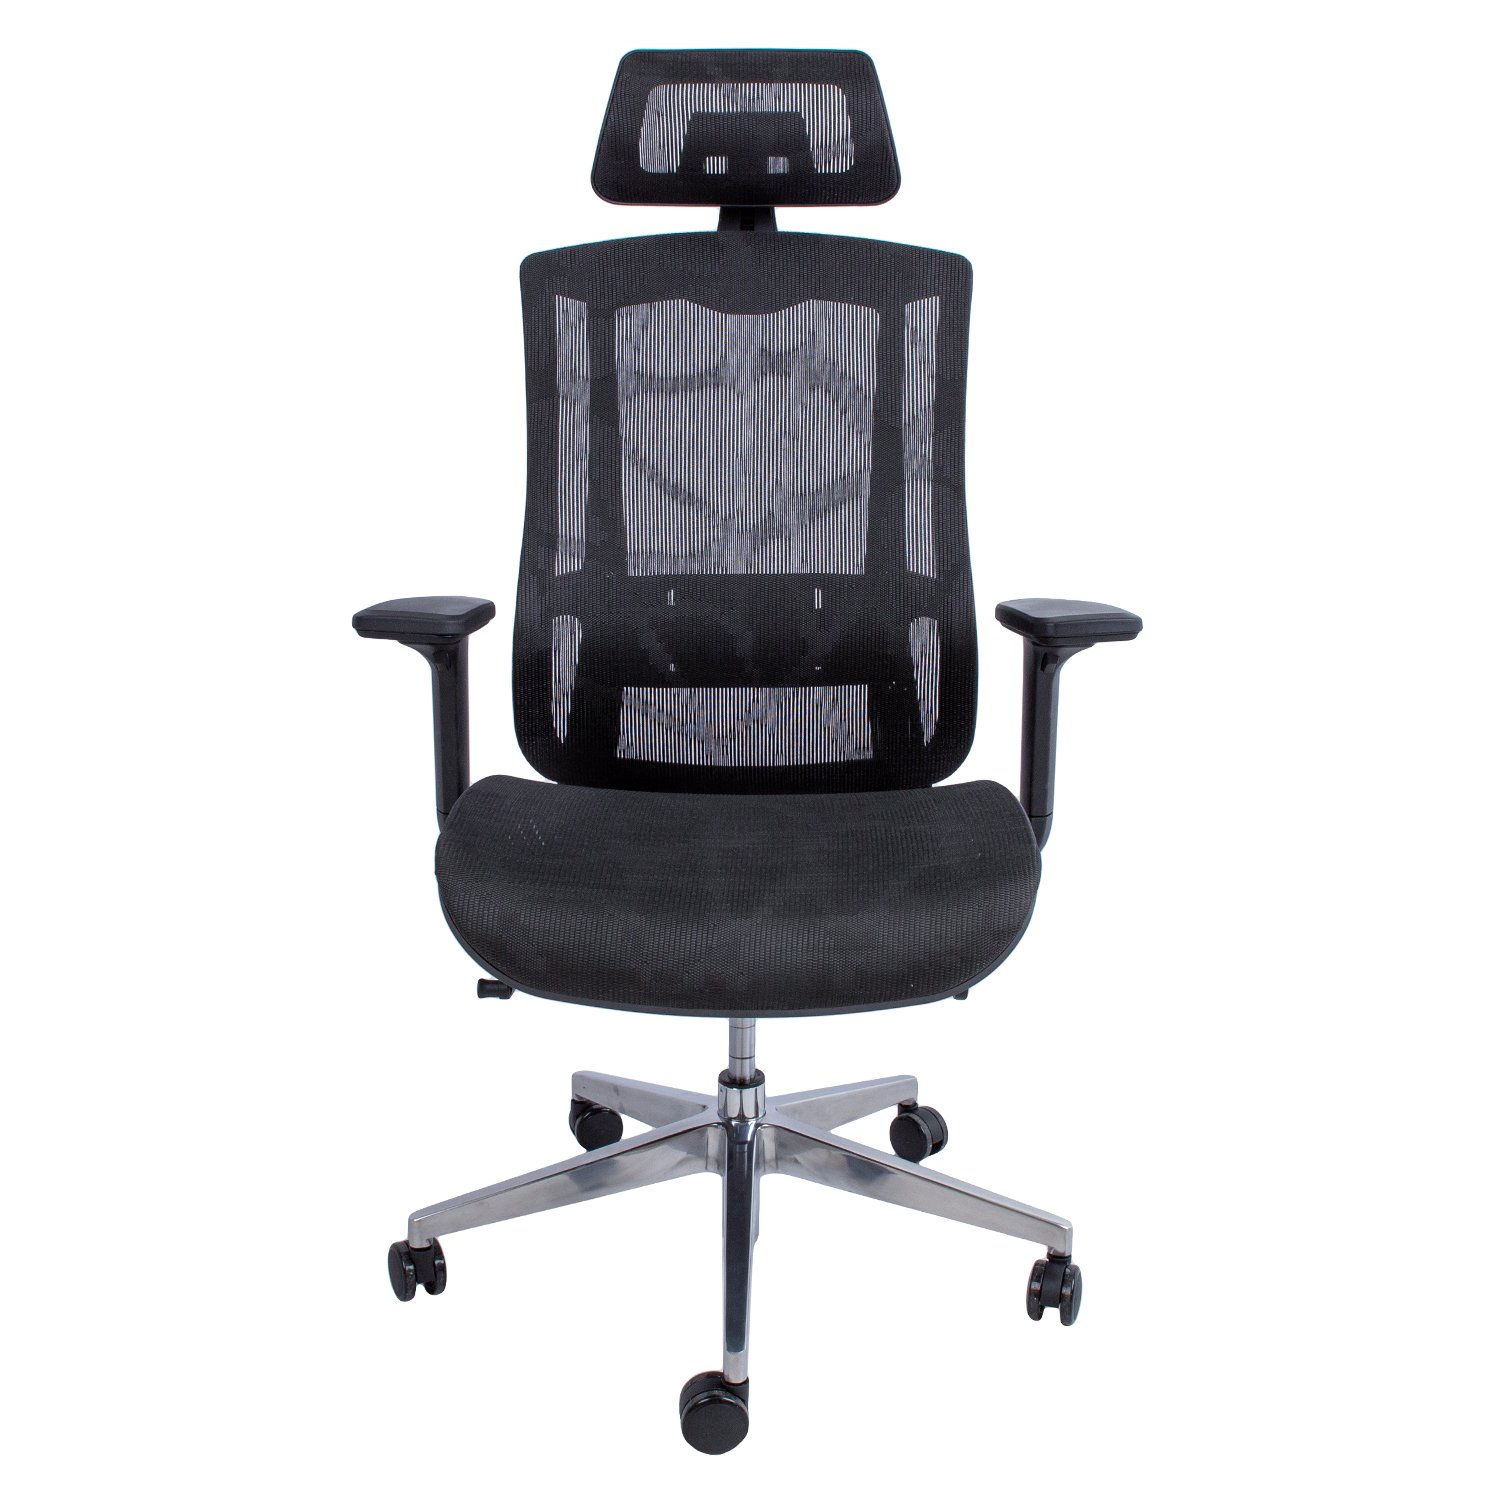 Biuro kėdė FLEX, 70x70xH116-126 cm, juoda - 1